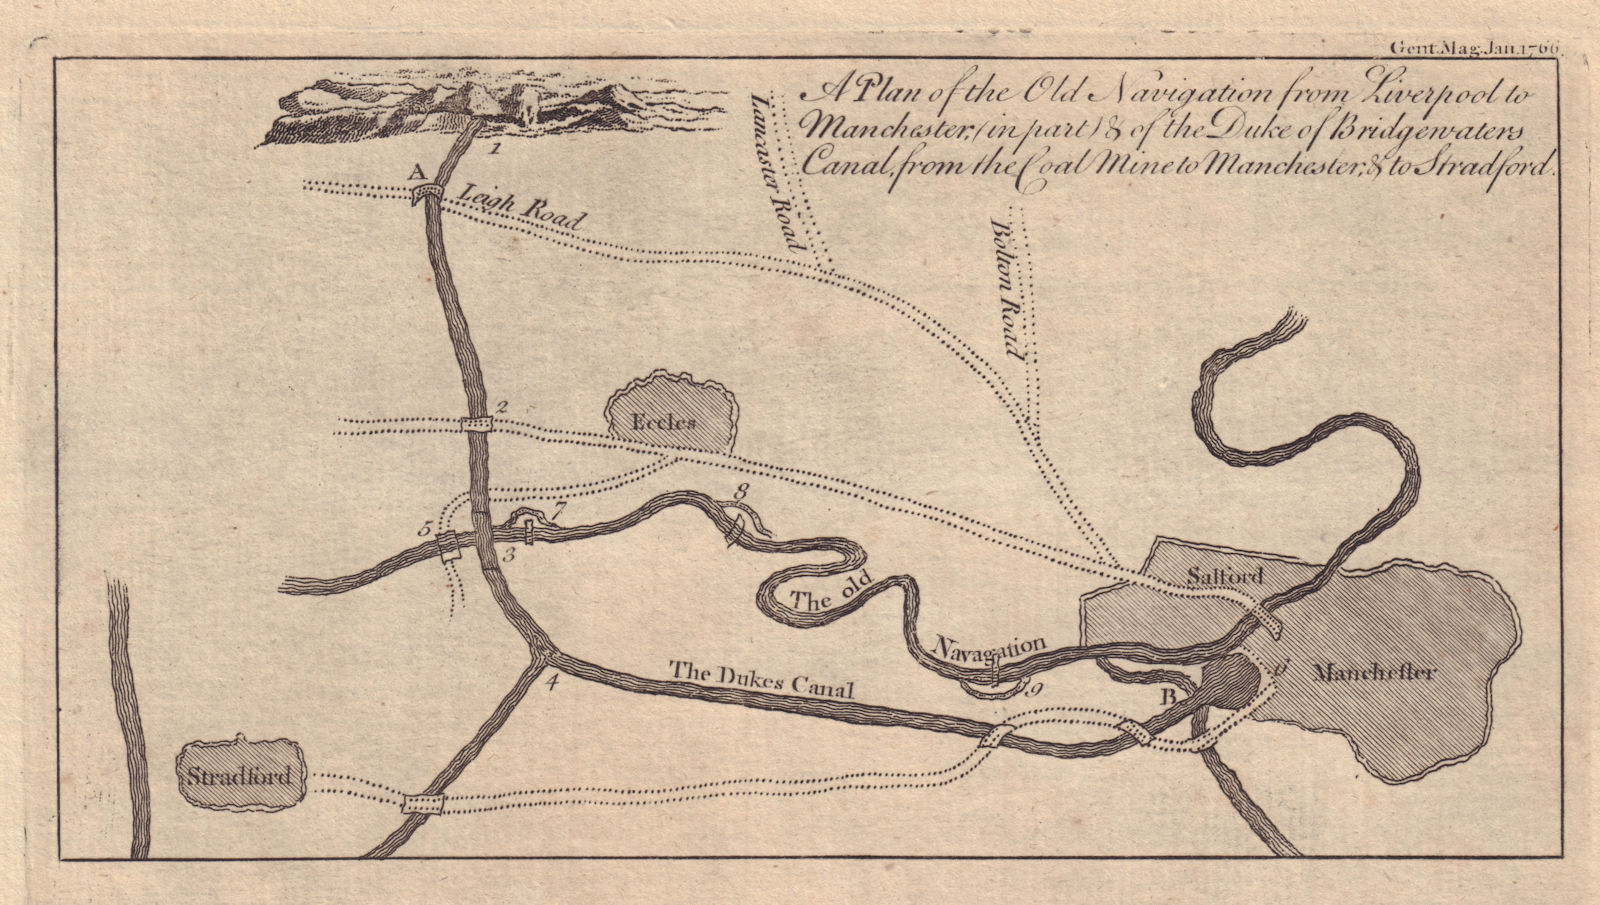 Mersey & Irwell Navigation. Bridgewater Canal. Manchester. GENTS MAG 1766 map